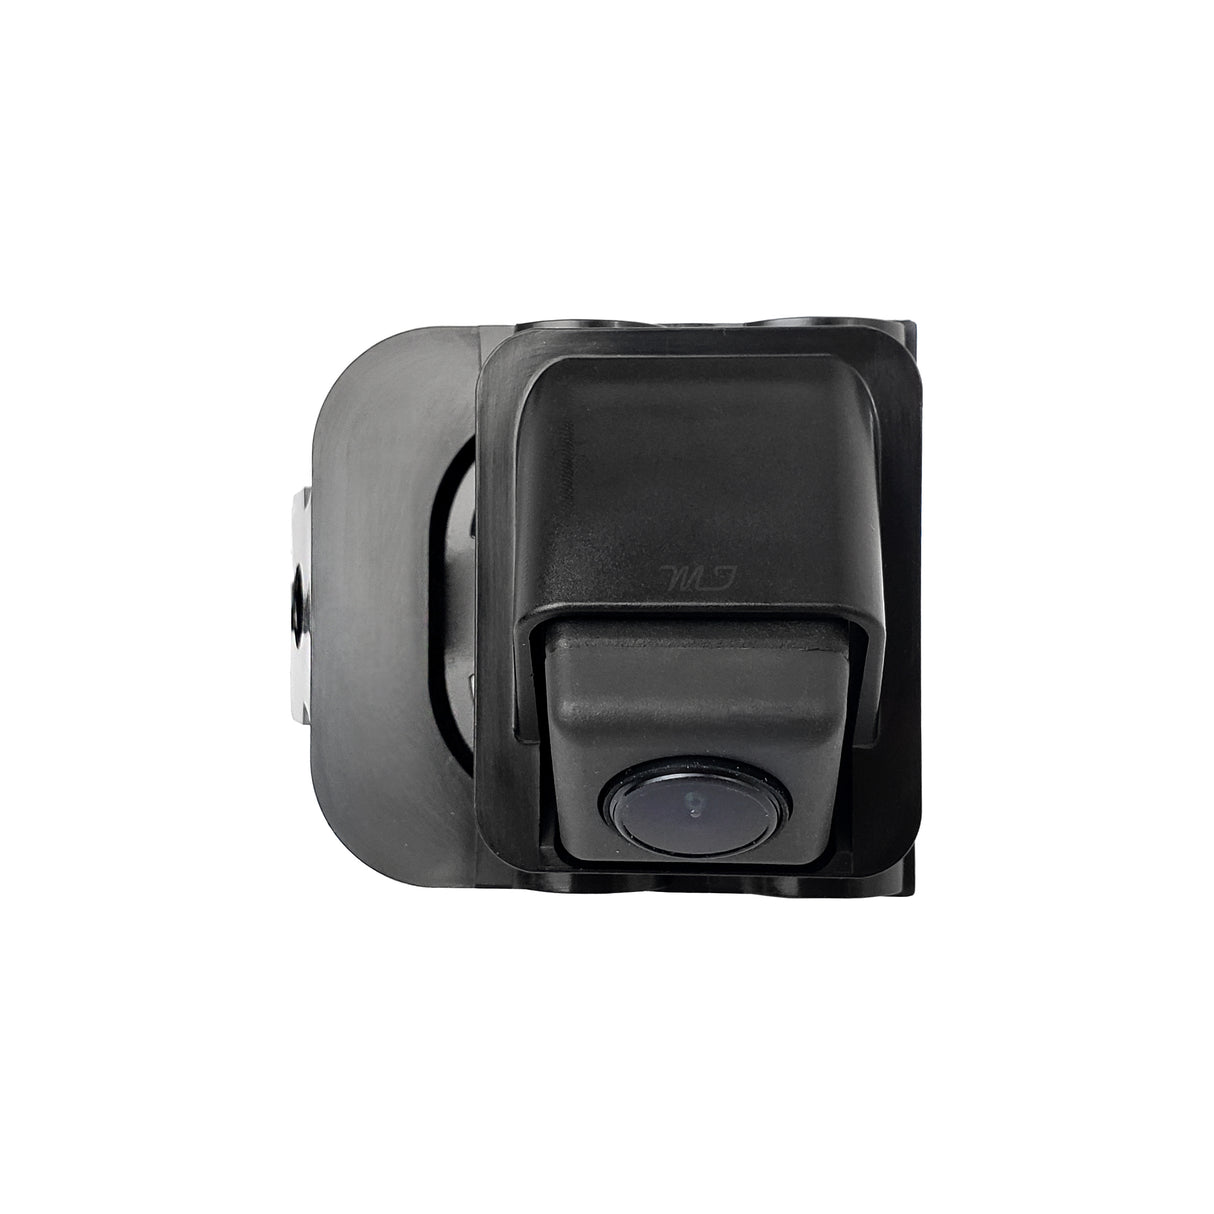 Kia Forte Hatchback w/ Navigation System (2011-2013) OEM Replacement Backup Camera OE Part # 95760-1M600